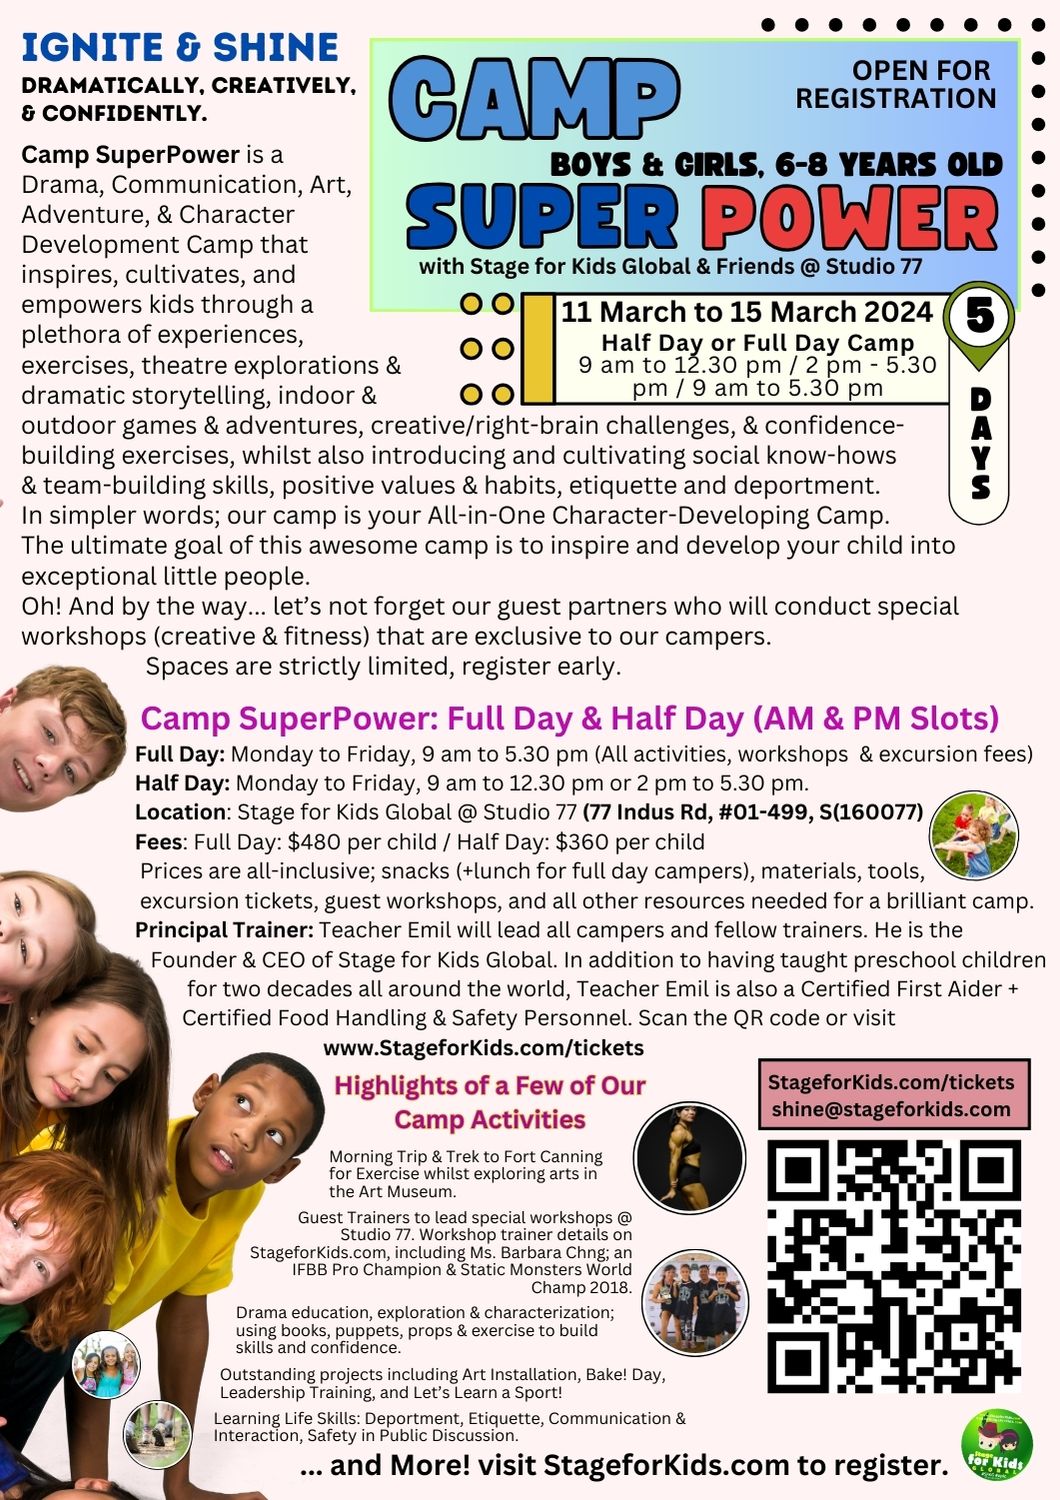 inspiration for kids teacher Emil A default flyer showcasing the super power camp.